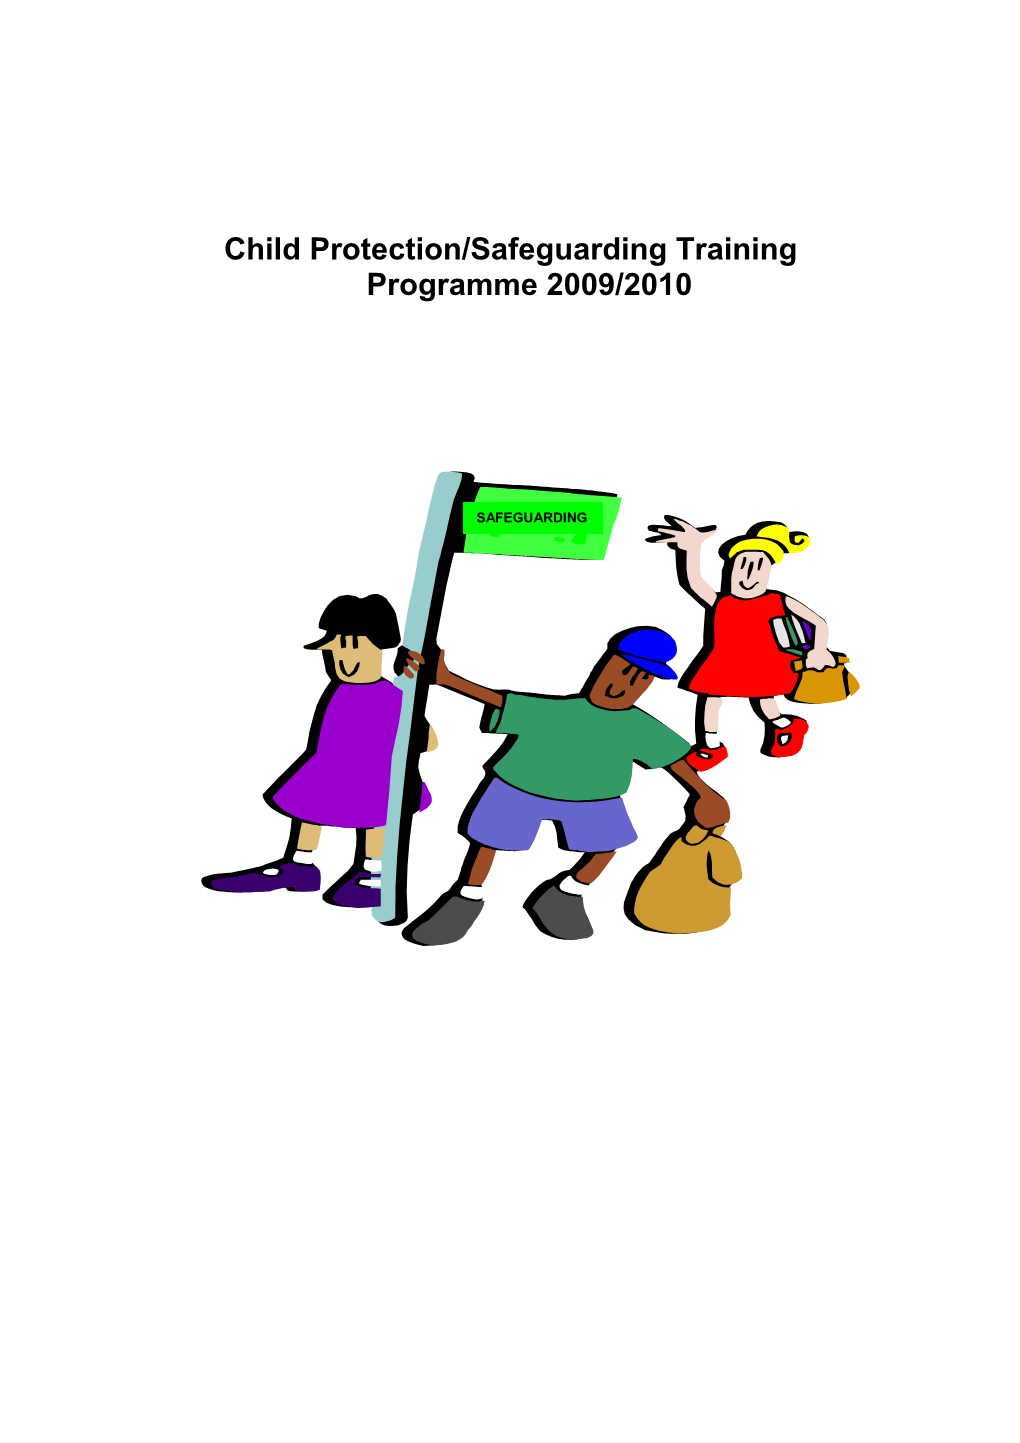 Child Protection/Safeguarding Training Programme 2009/2010